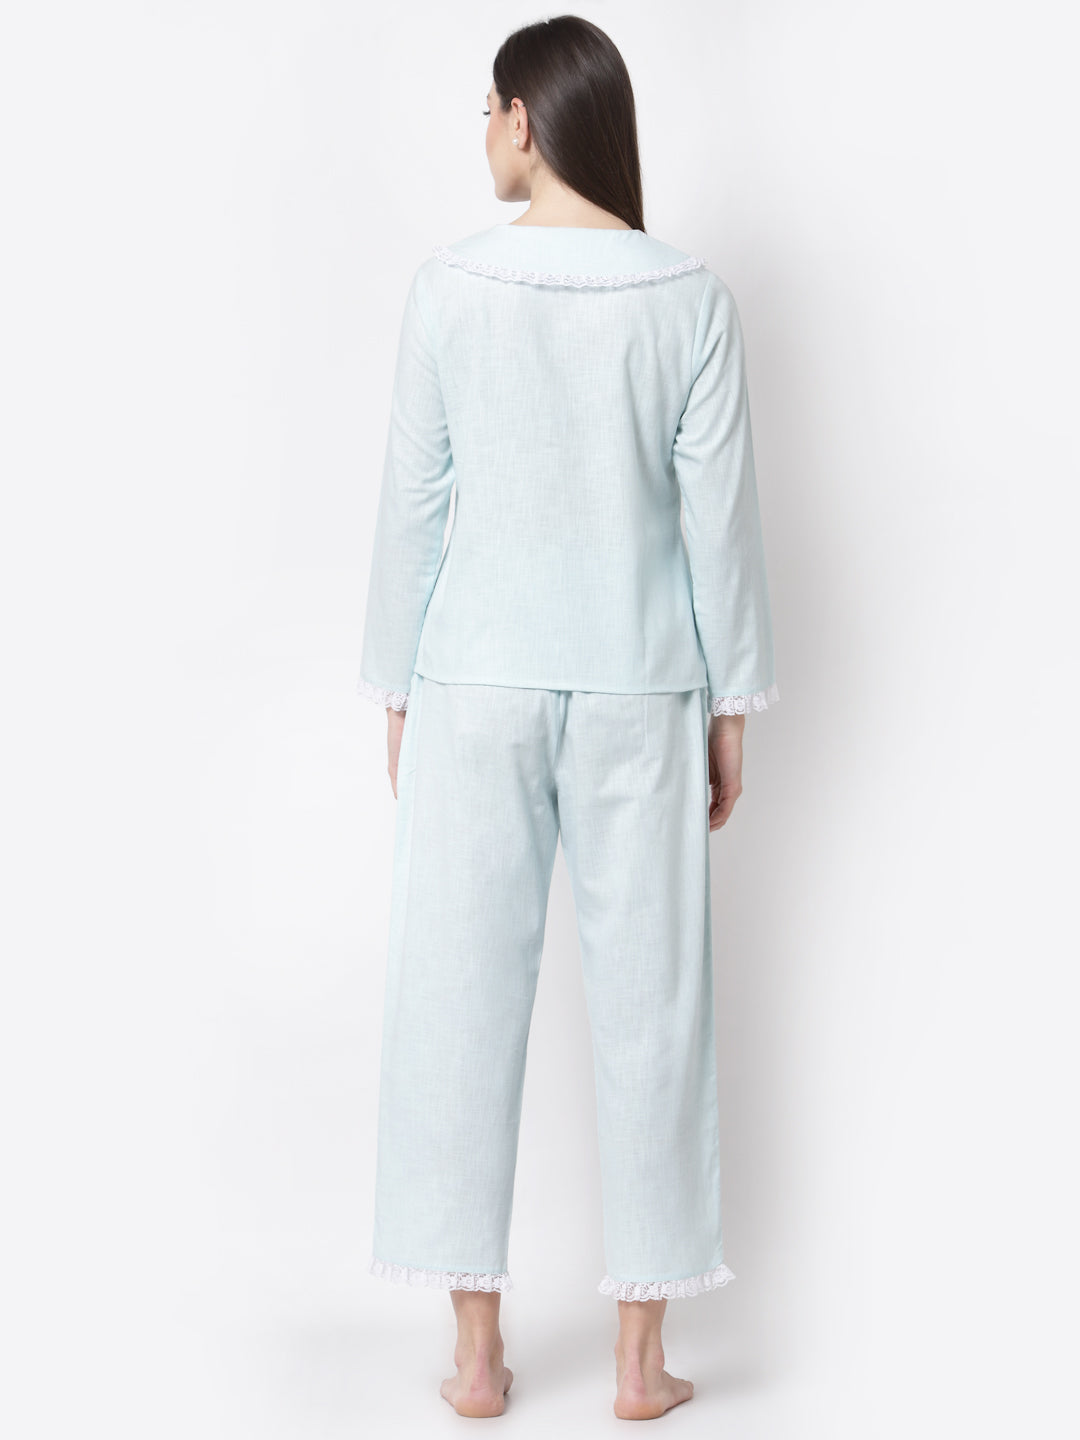 Blanc9 Lacy Cotton Blue Pretty Pyjama Night Suit-B9NW41